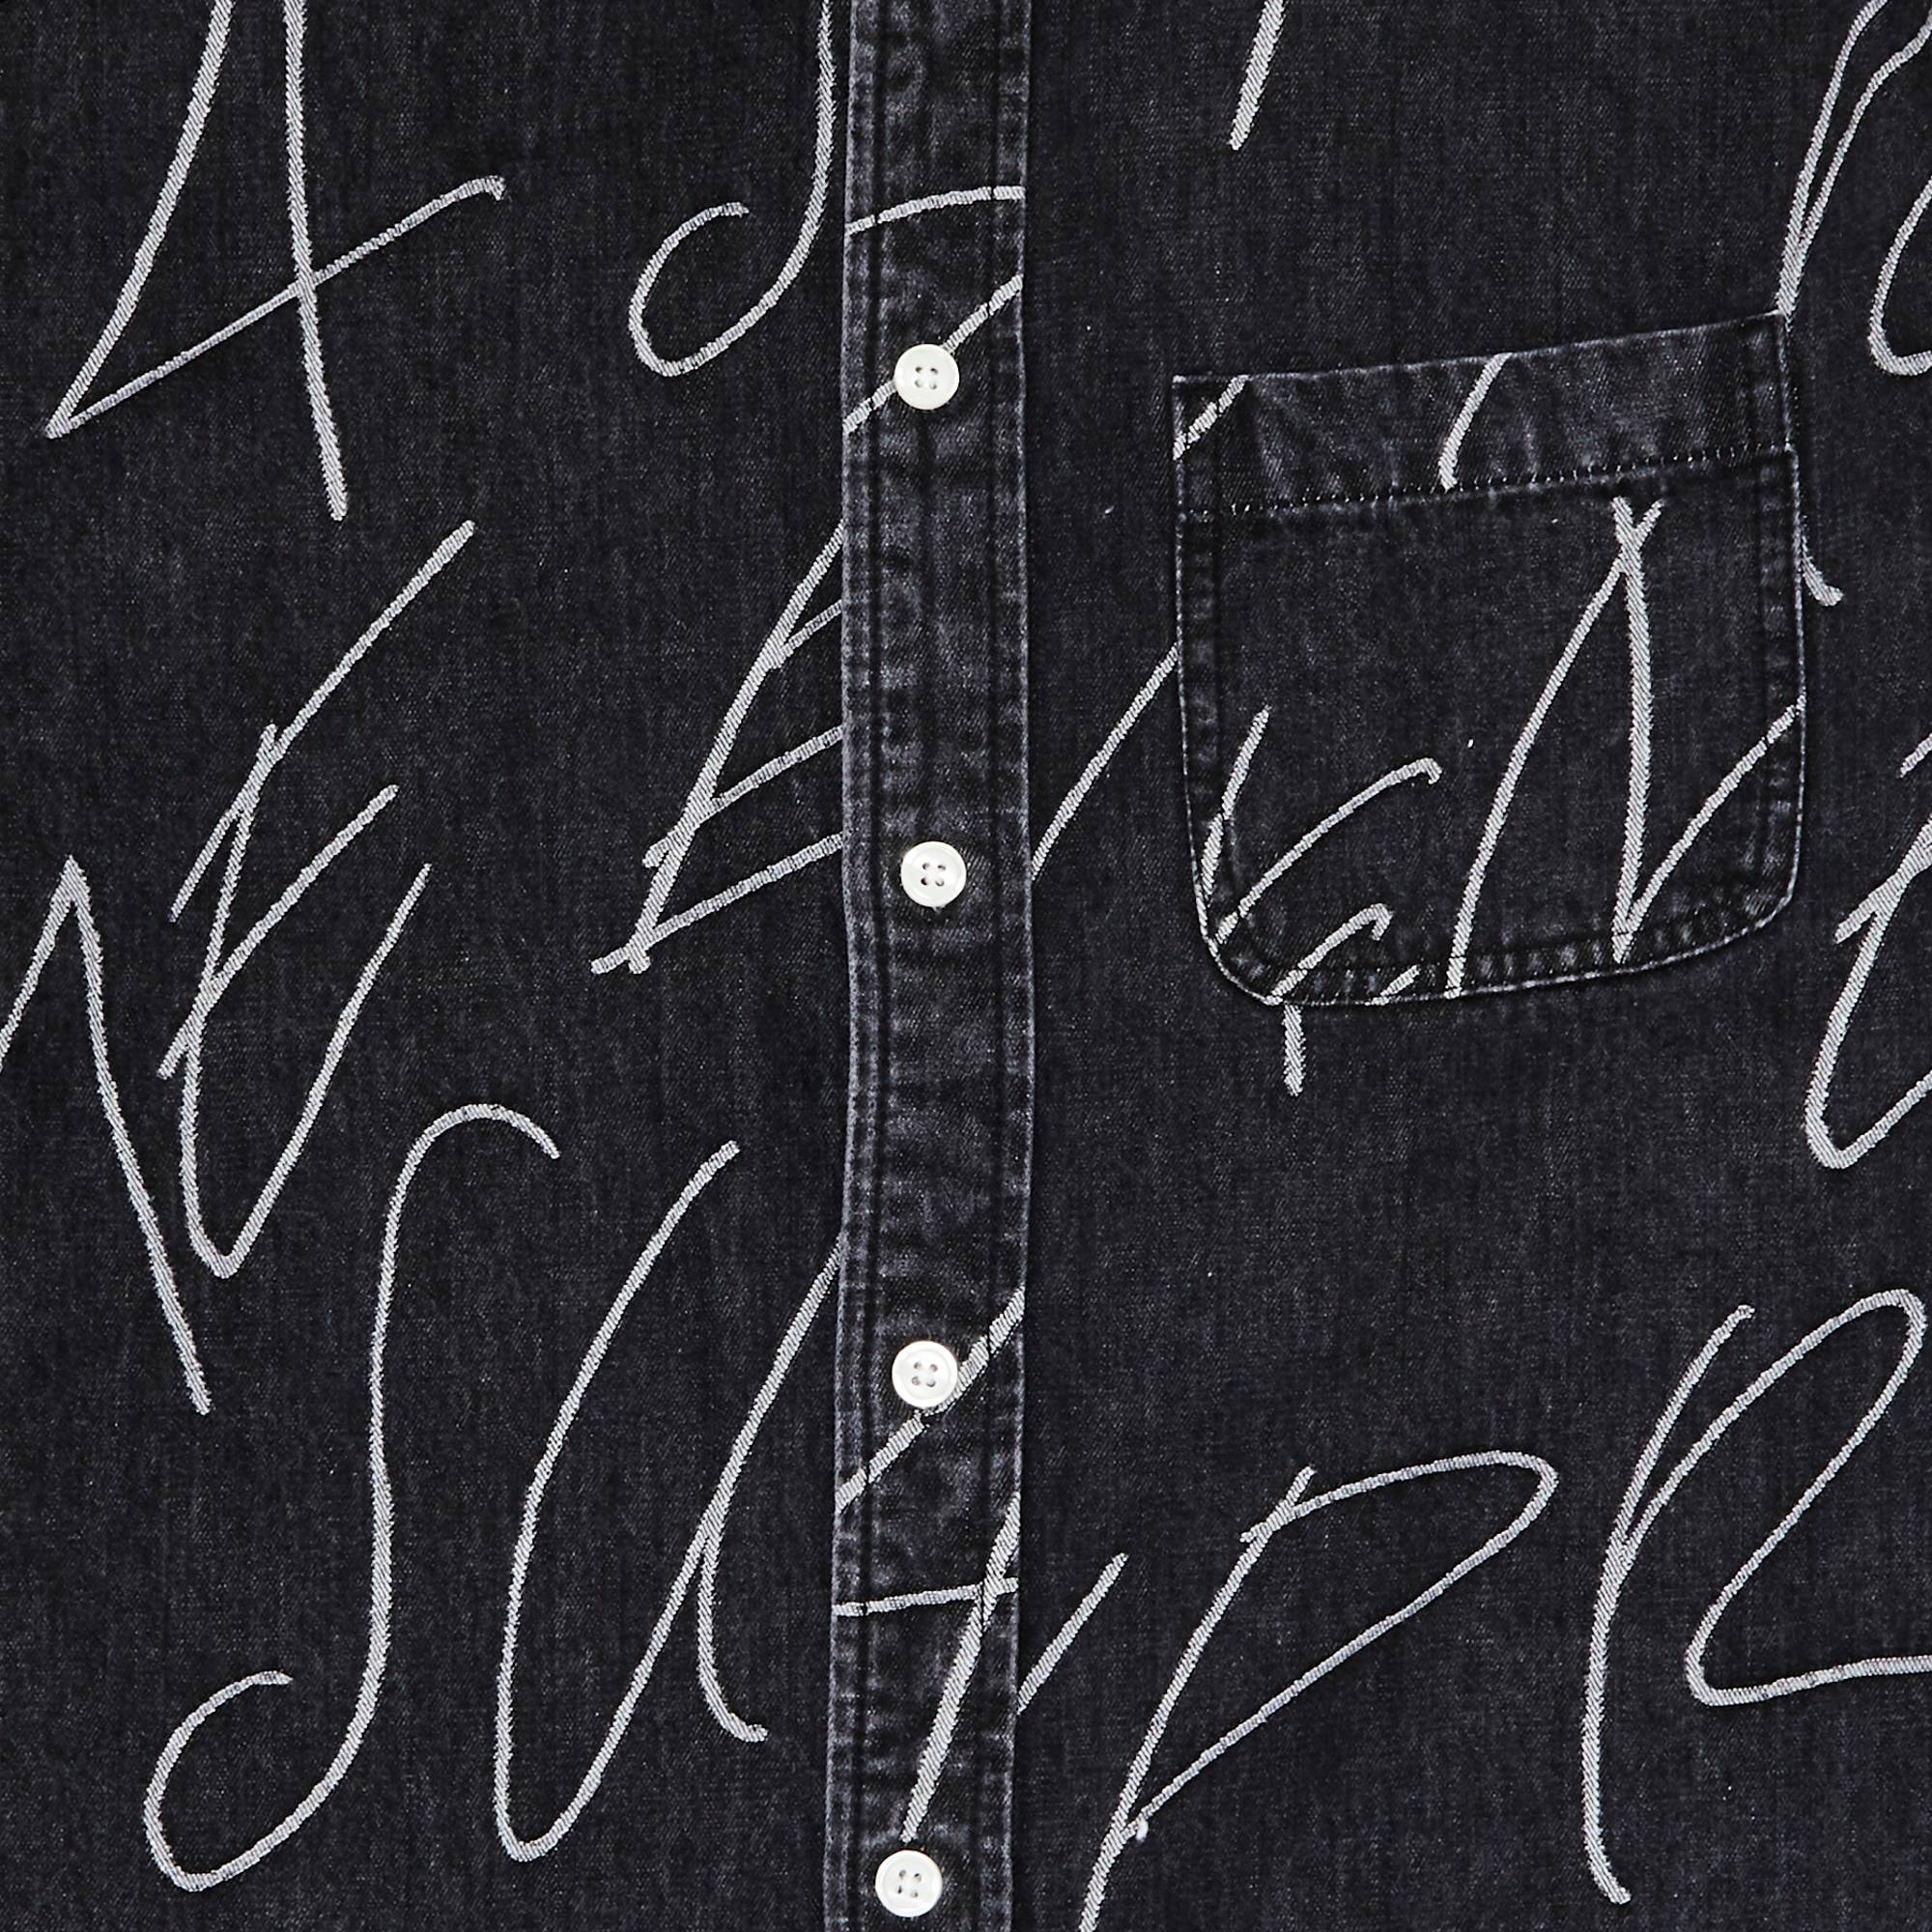 Supreme Handwriting Jacquard Denim Shirt 'Washed Black'